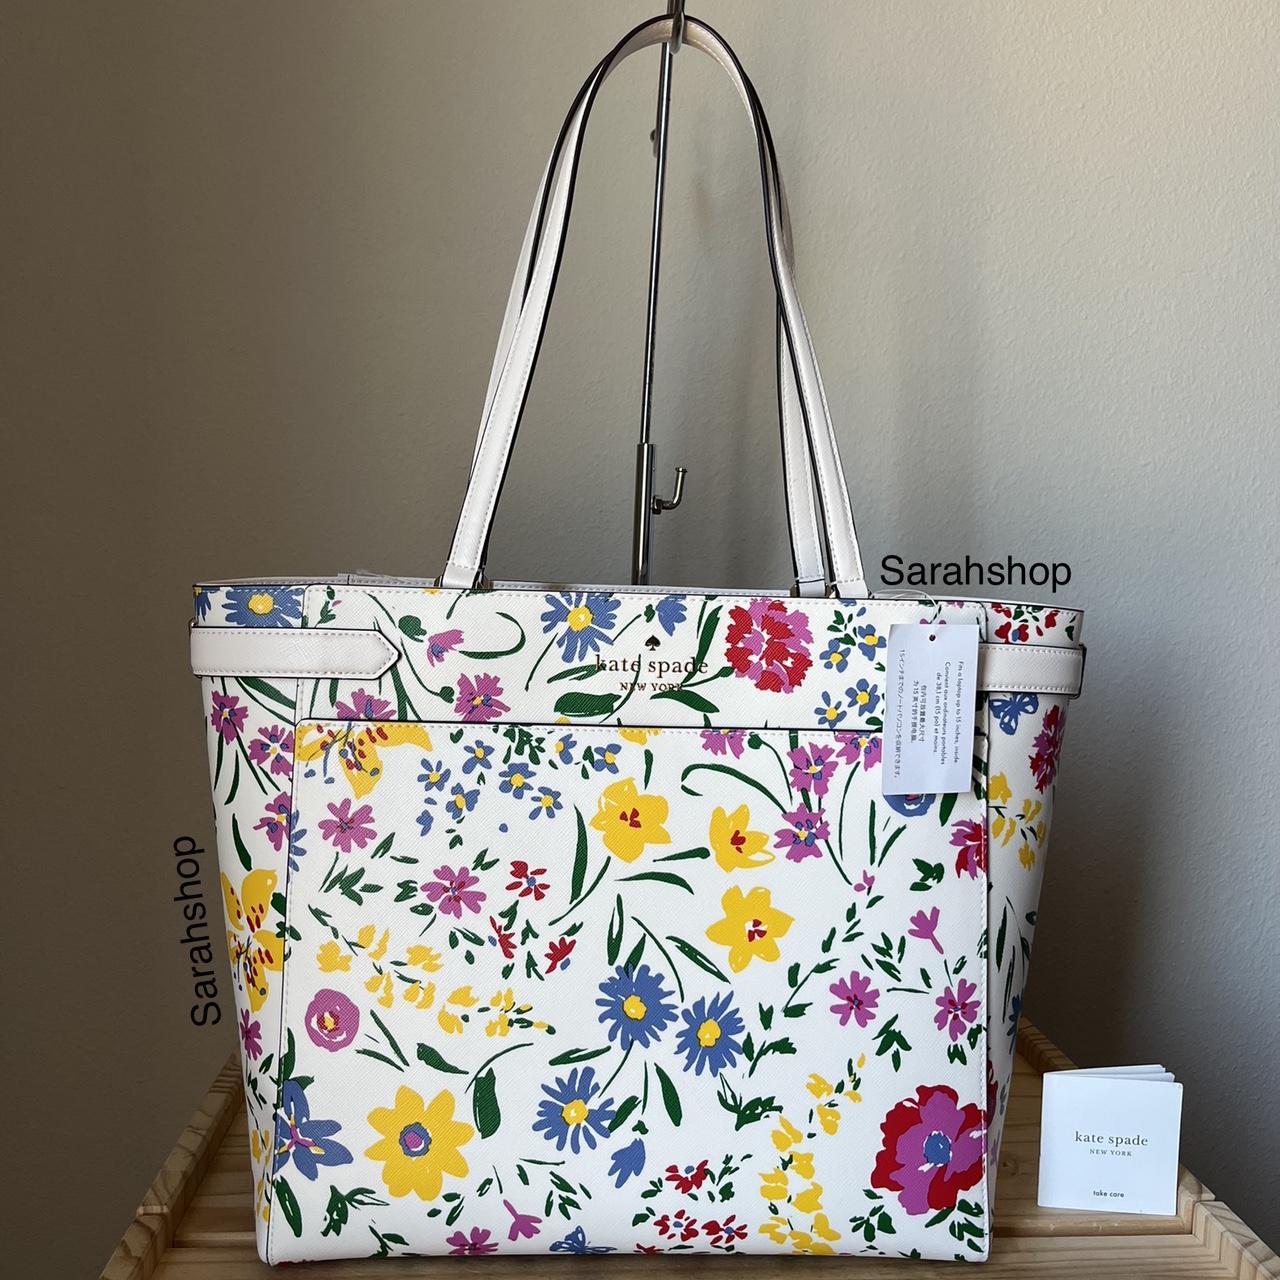 Buy Kate Spade New York Medium Satchel Dawn Breezy Floral Purse at Amazon.in